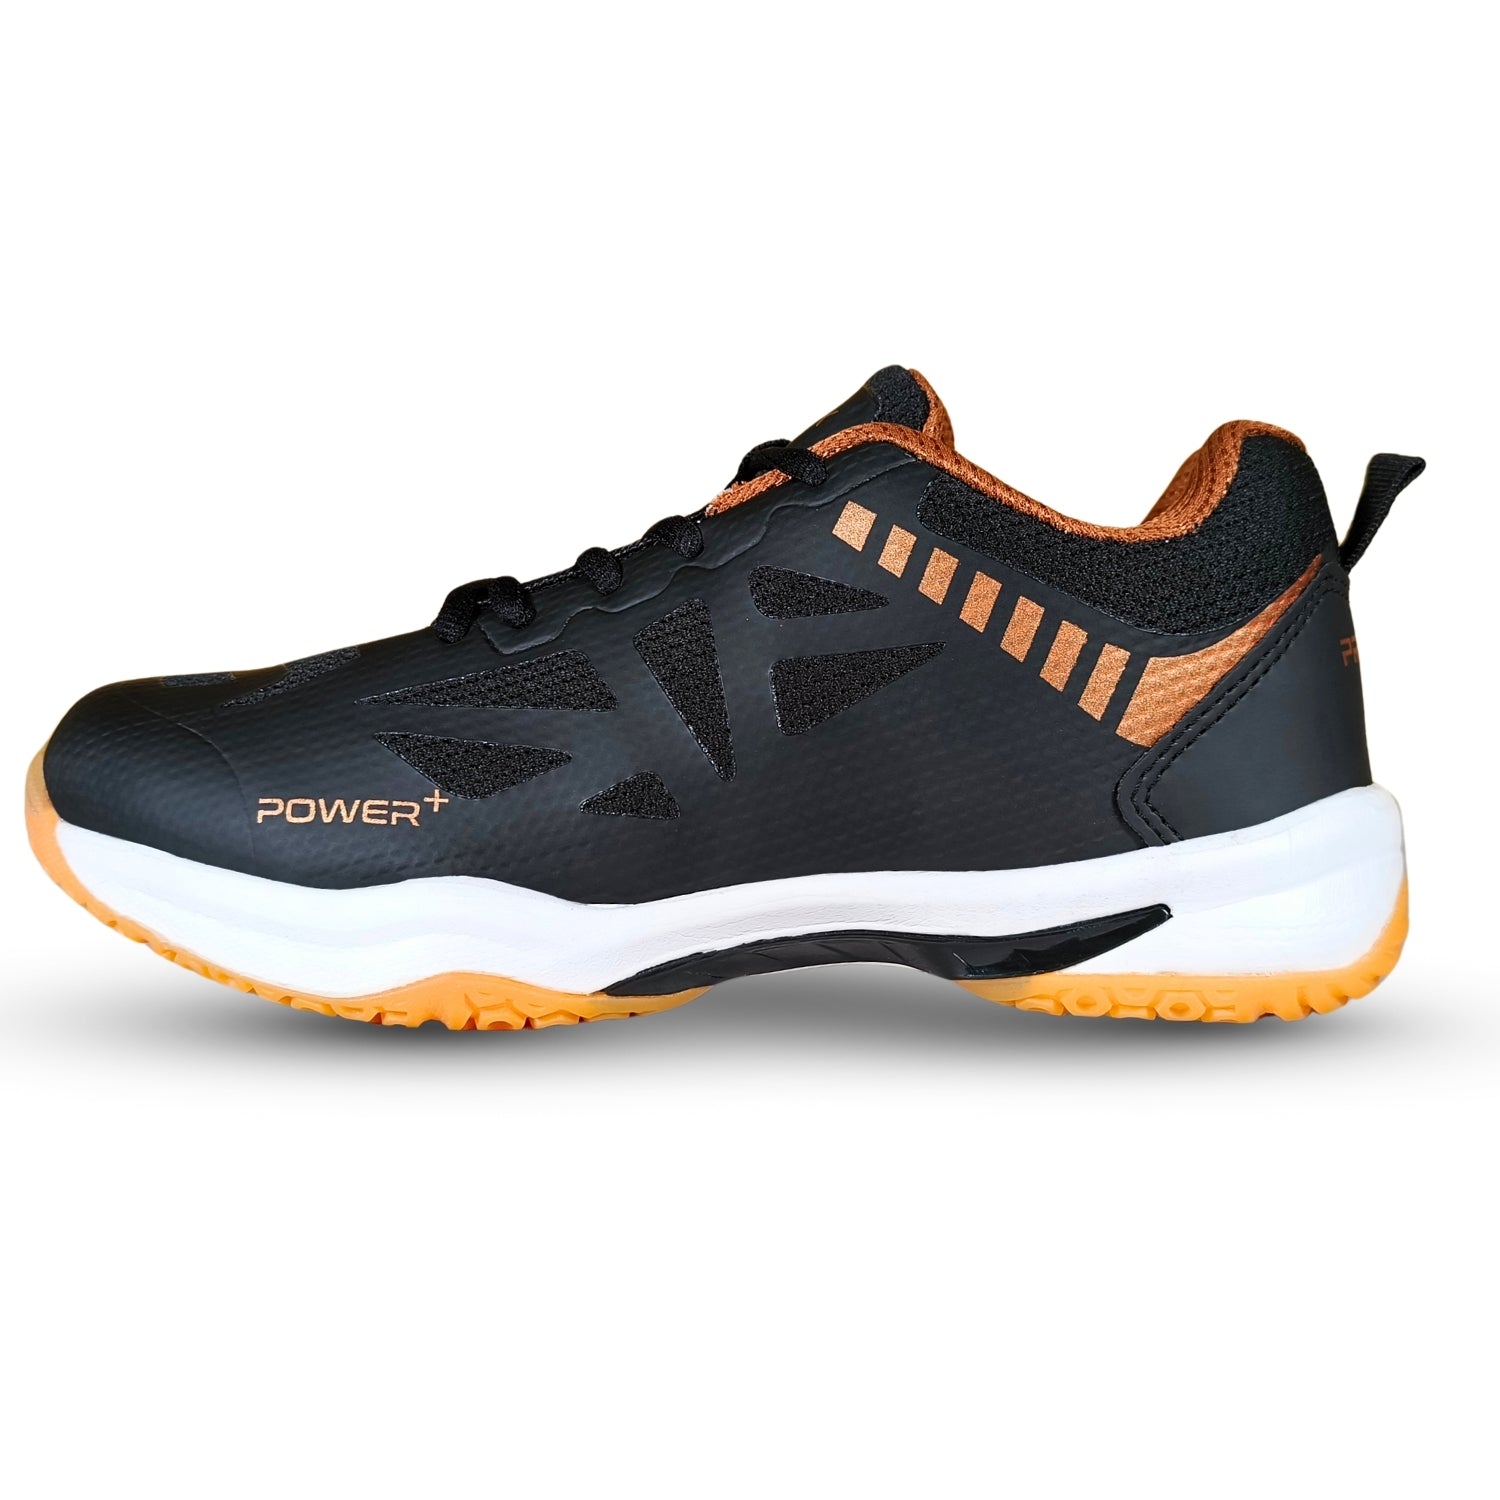 Prokick Power Plus Badminton Shoes - Best Price online Prokicksports.com